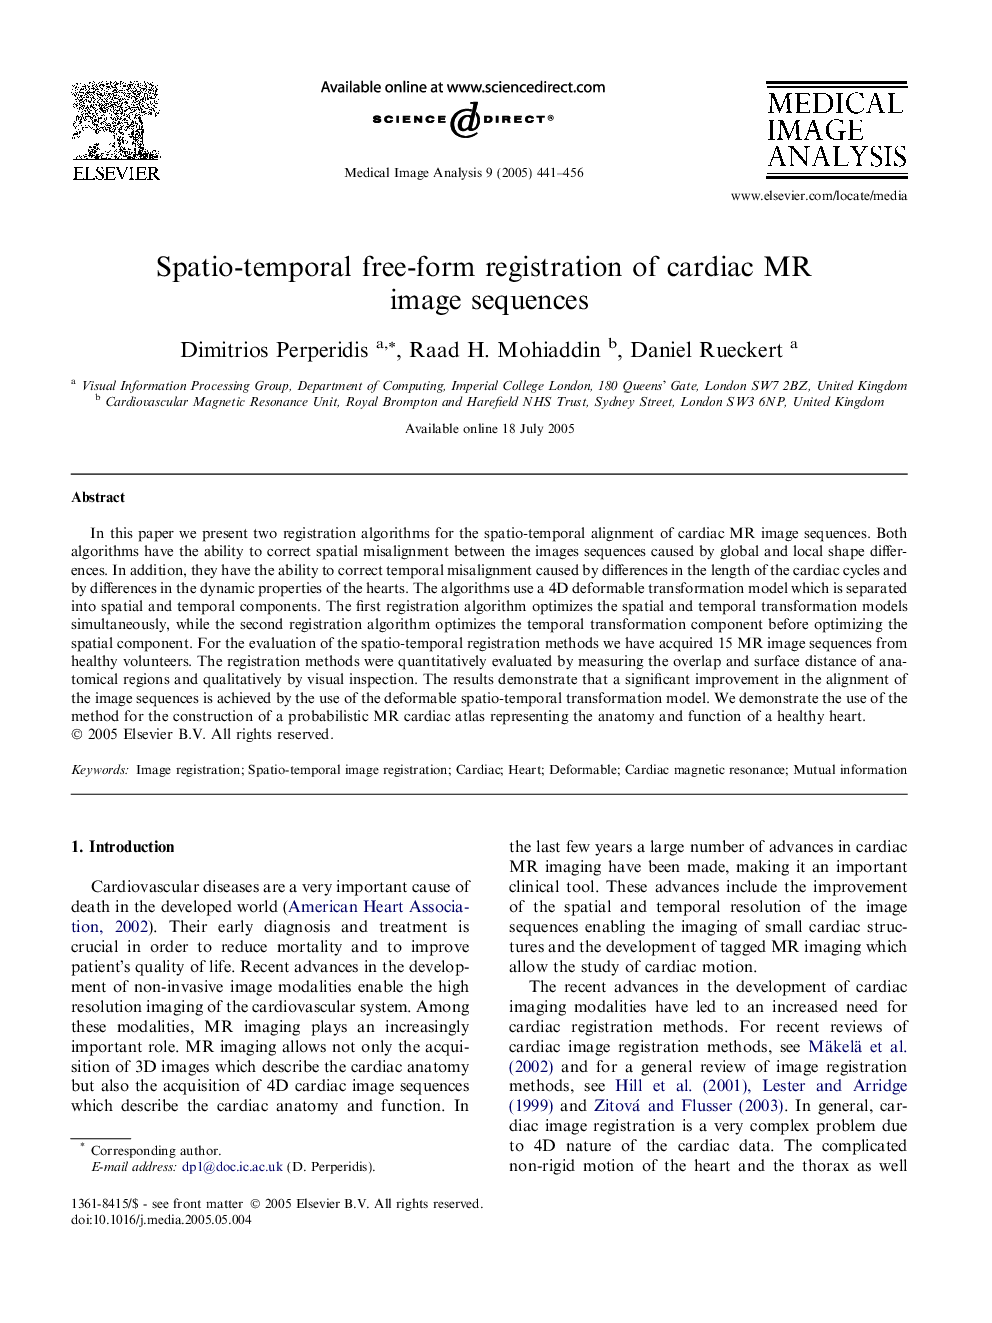 Spatio-temporal free-form registration of cardiac MR image sequences